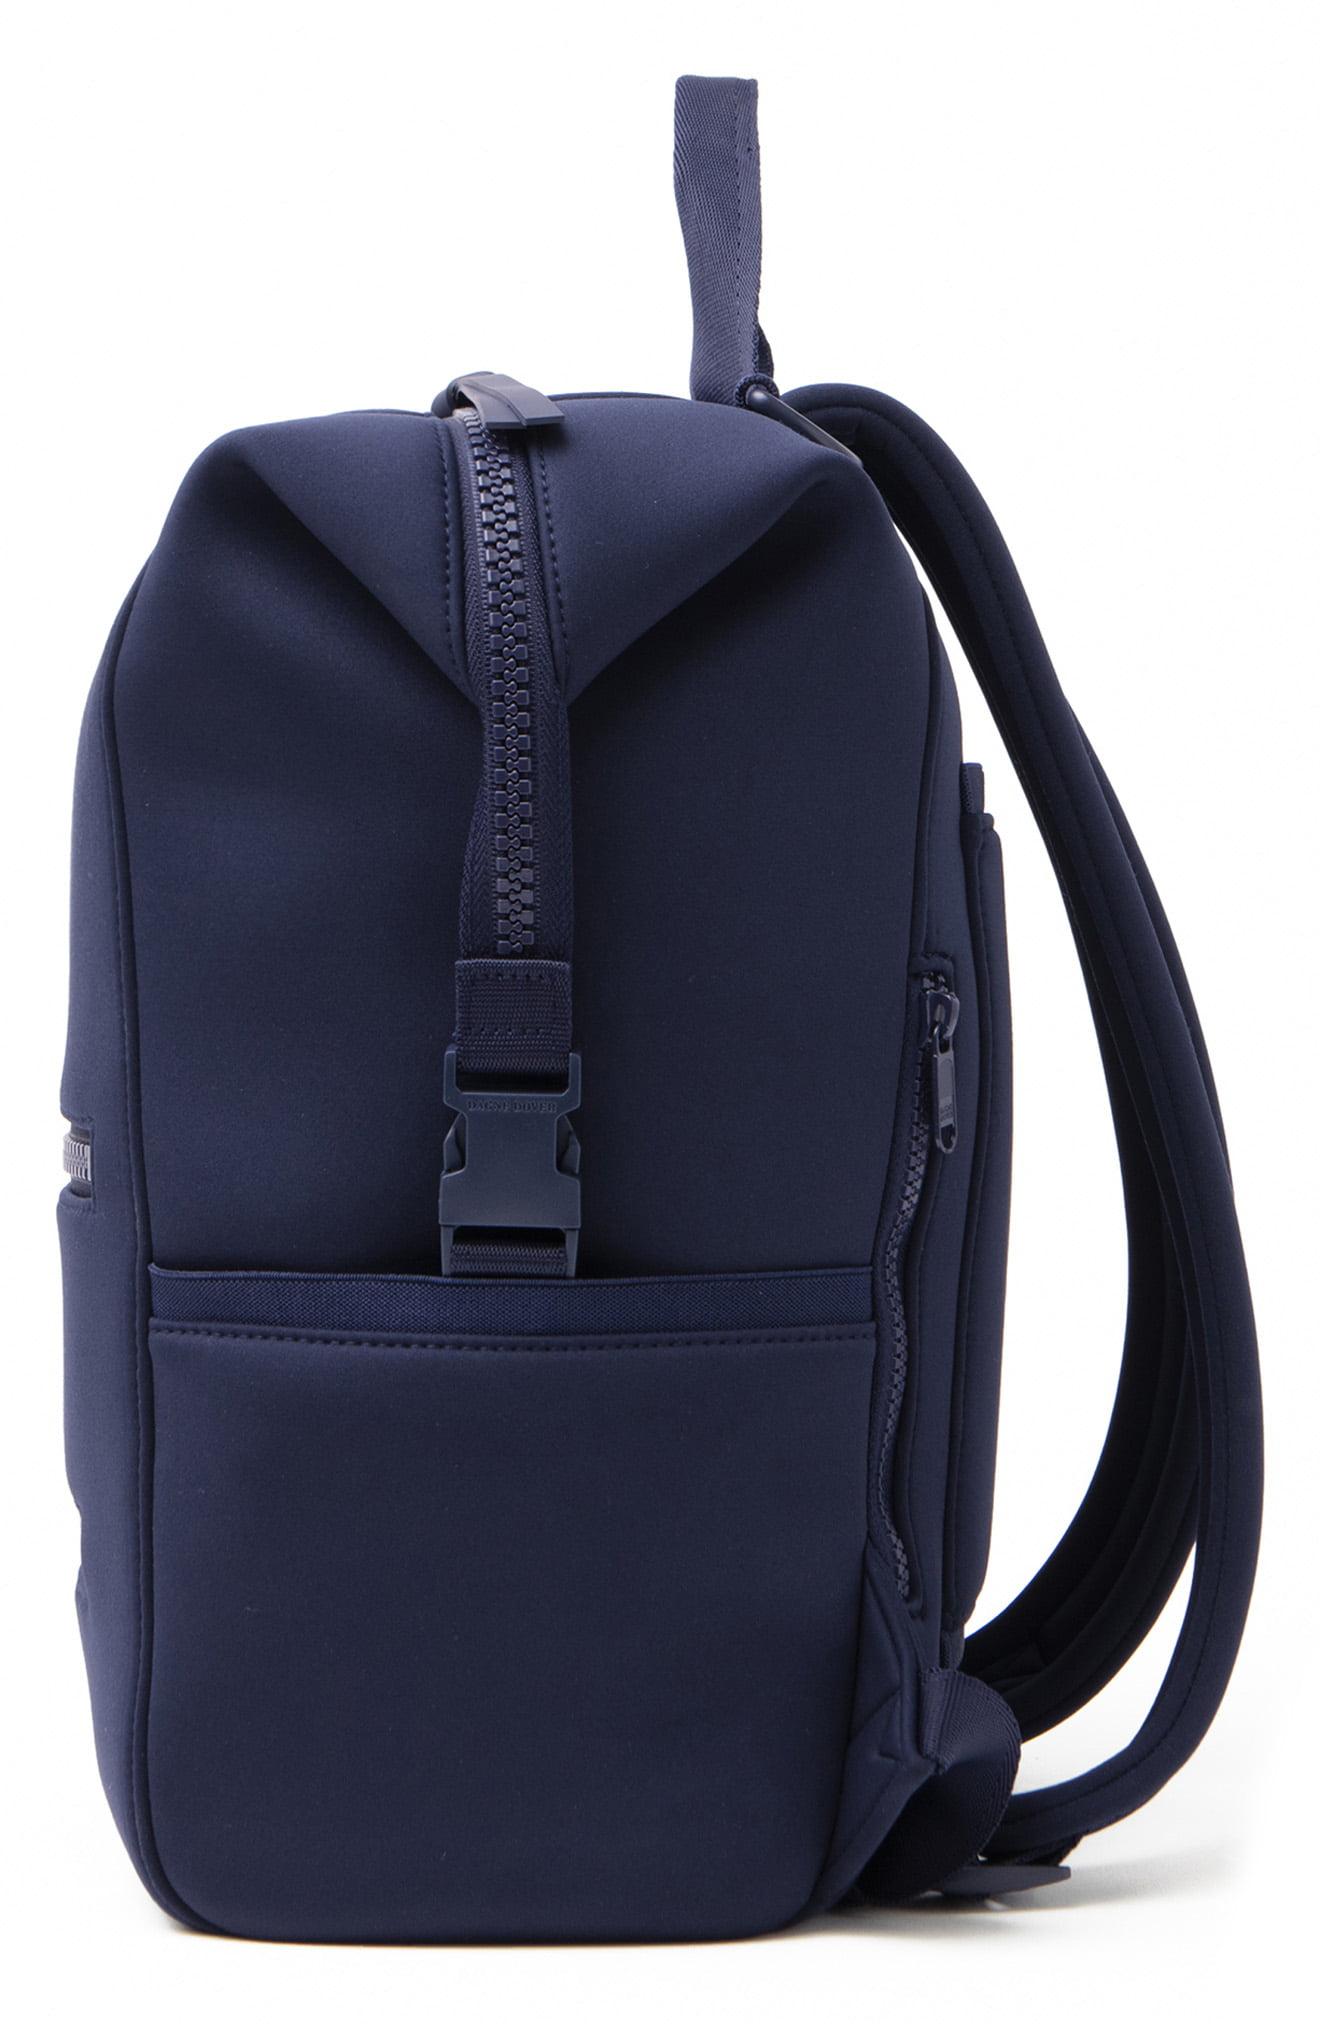 Dagne Dover Indi Diaper Backpack in Blue - Lyst